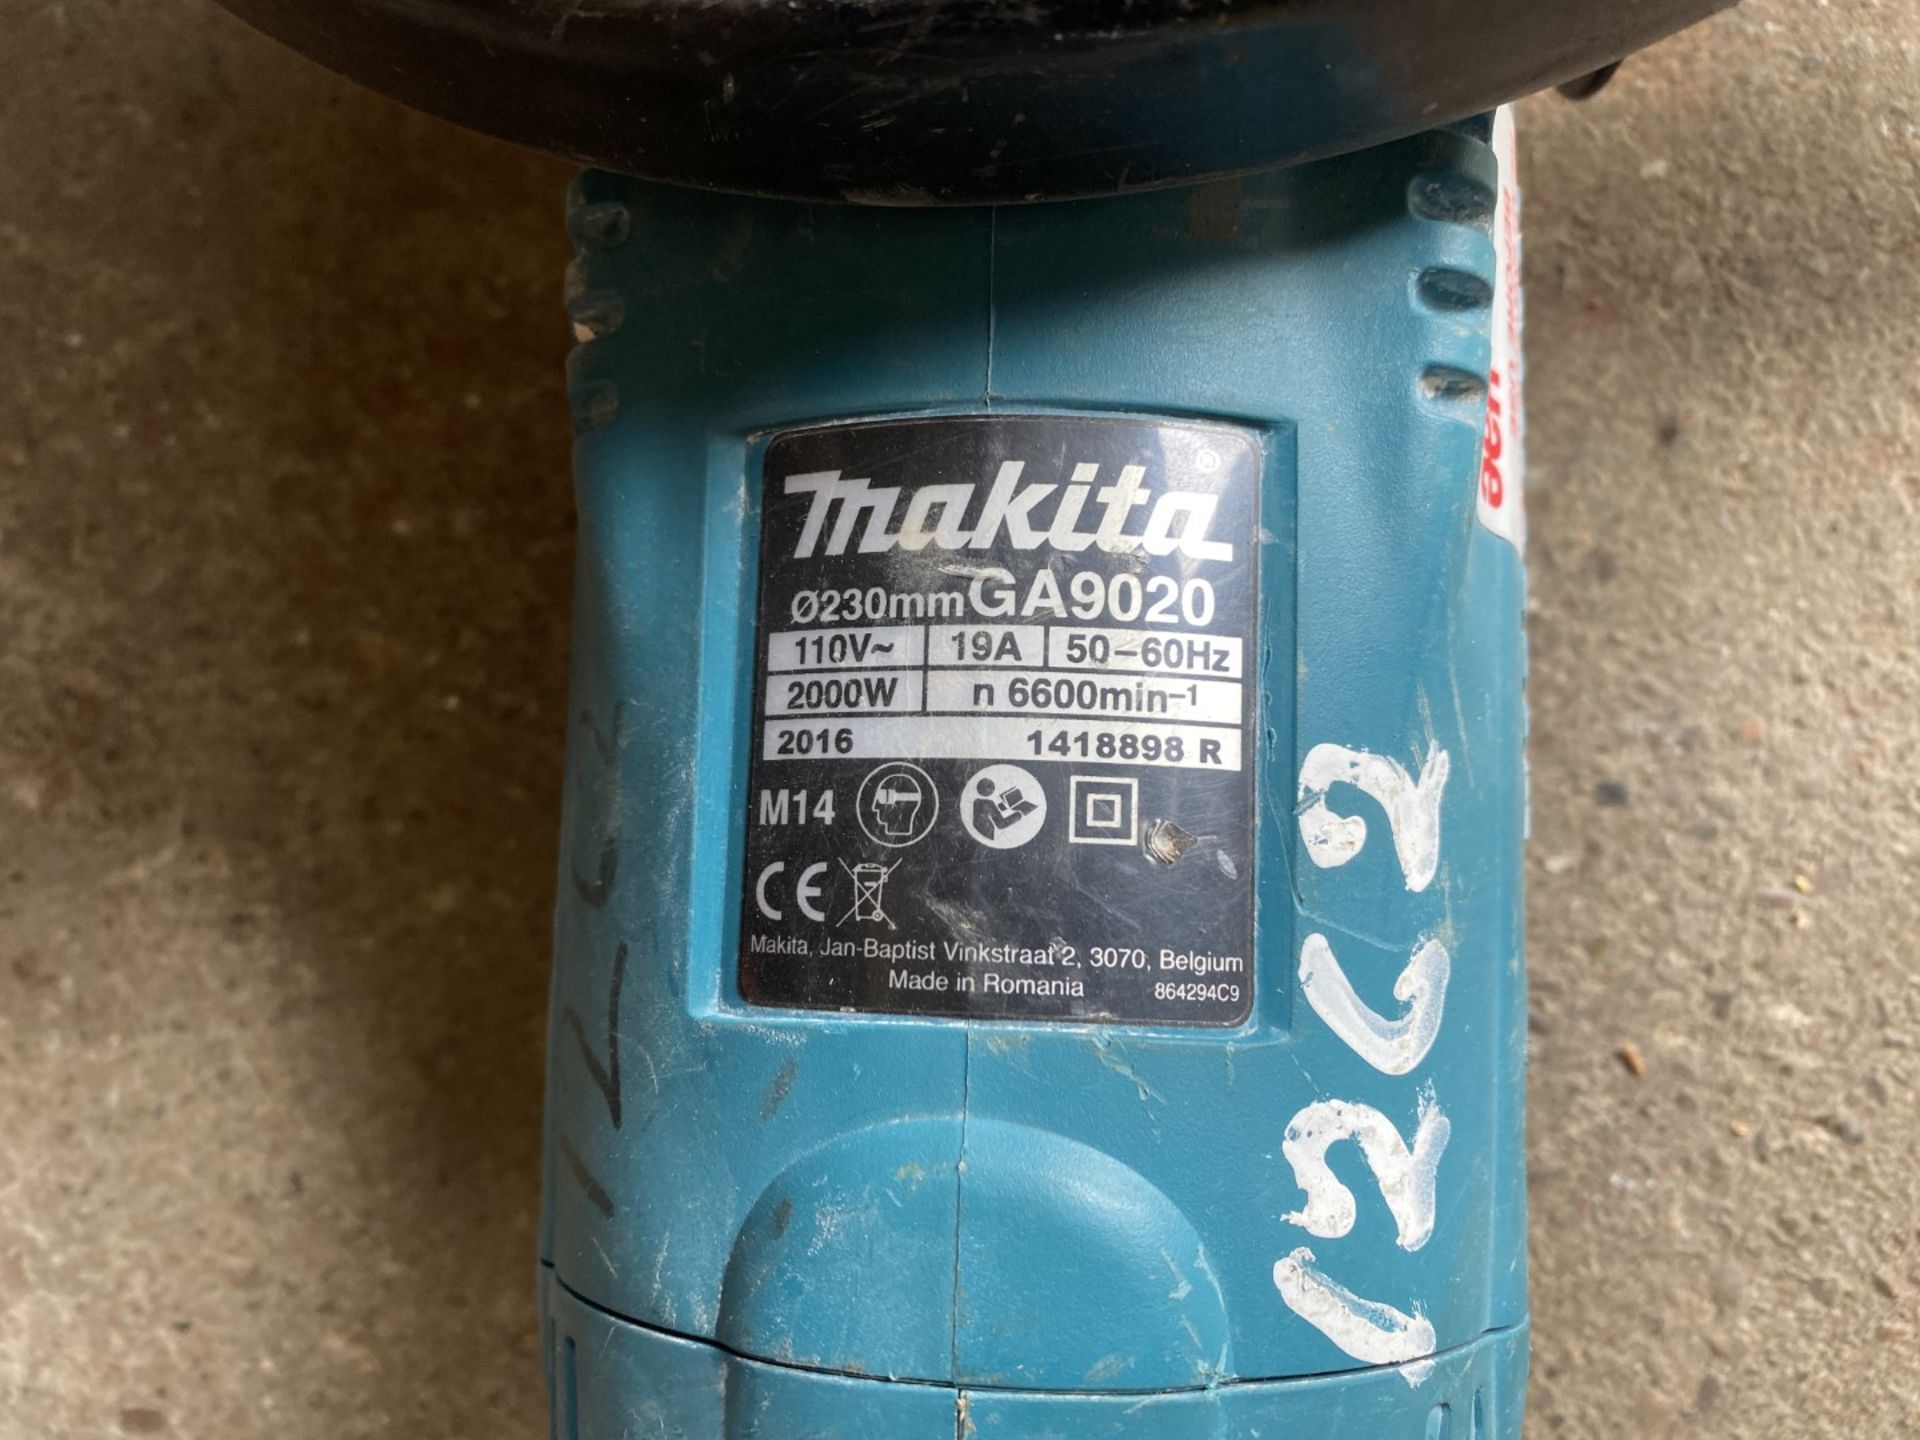 Makita GA9020 angle grinder, 110v - NOT TESTED - Image 4 of 4